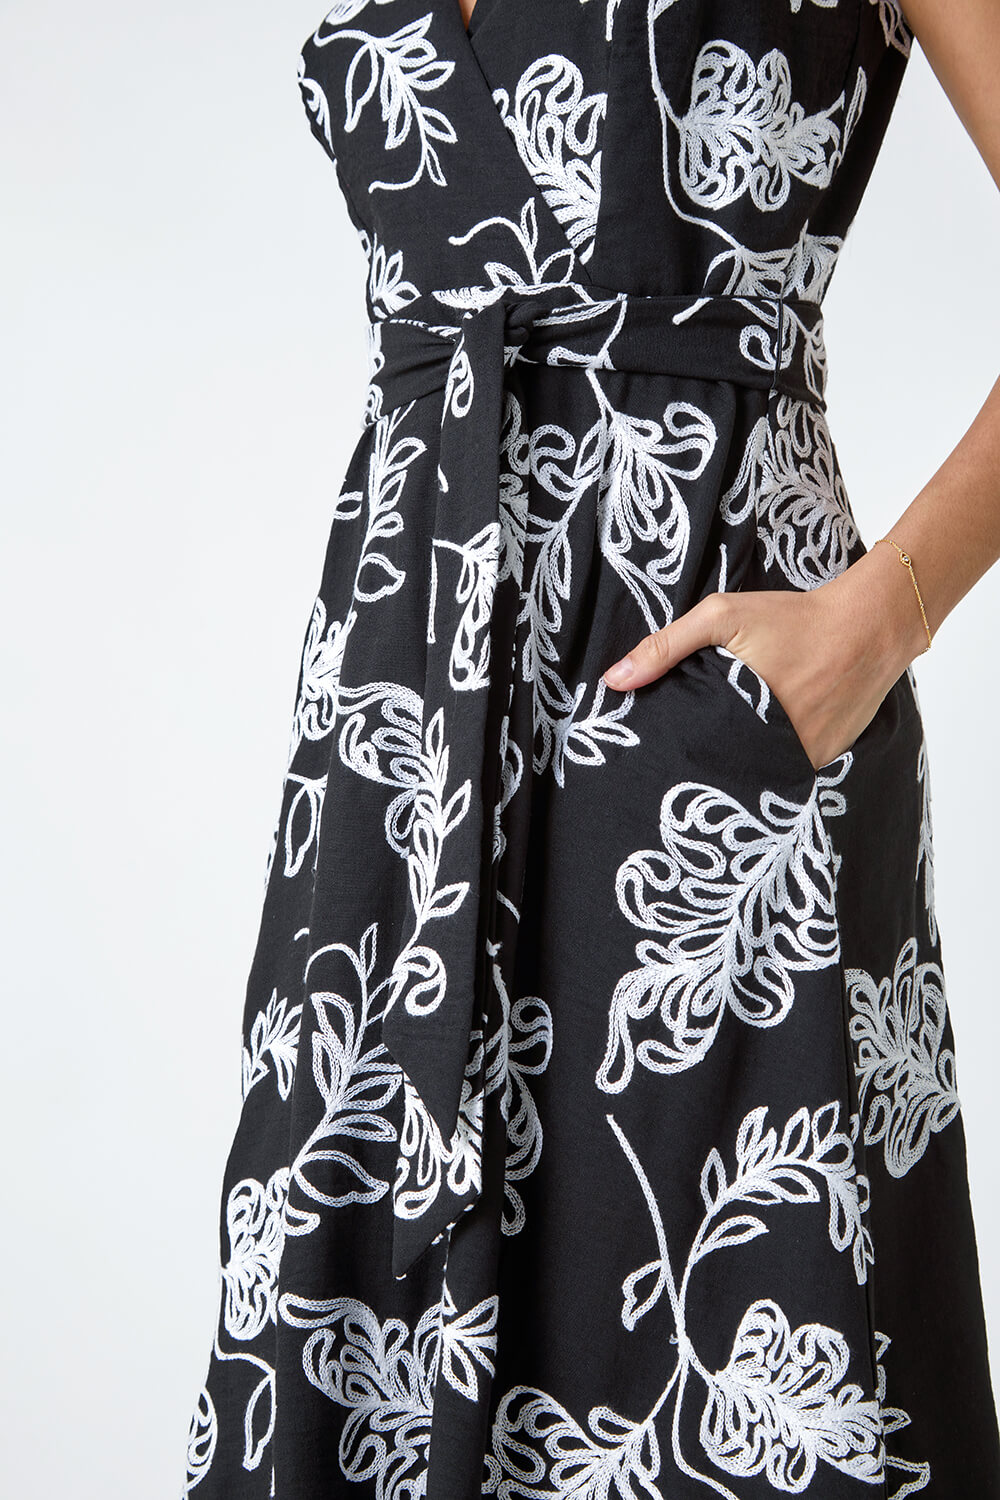 Black Floral Embroidered Cotton Blend Dress, Image 5 of 5